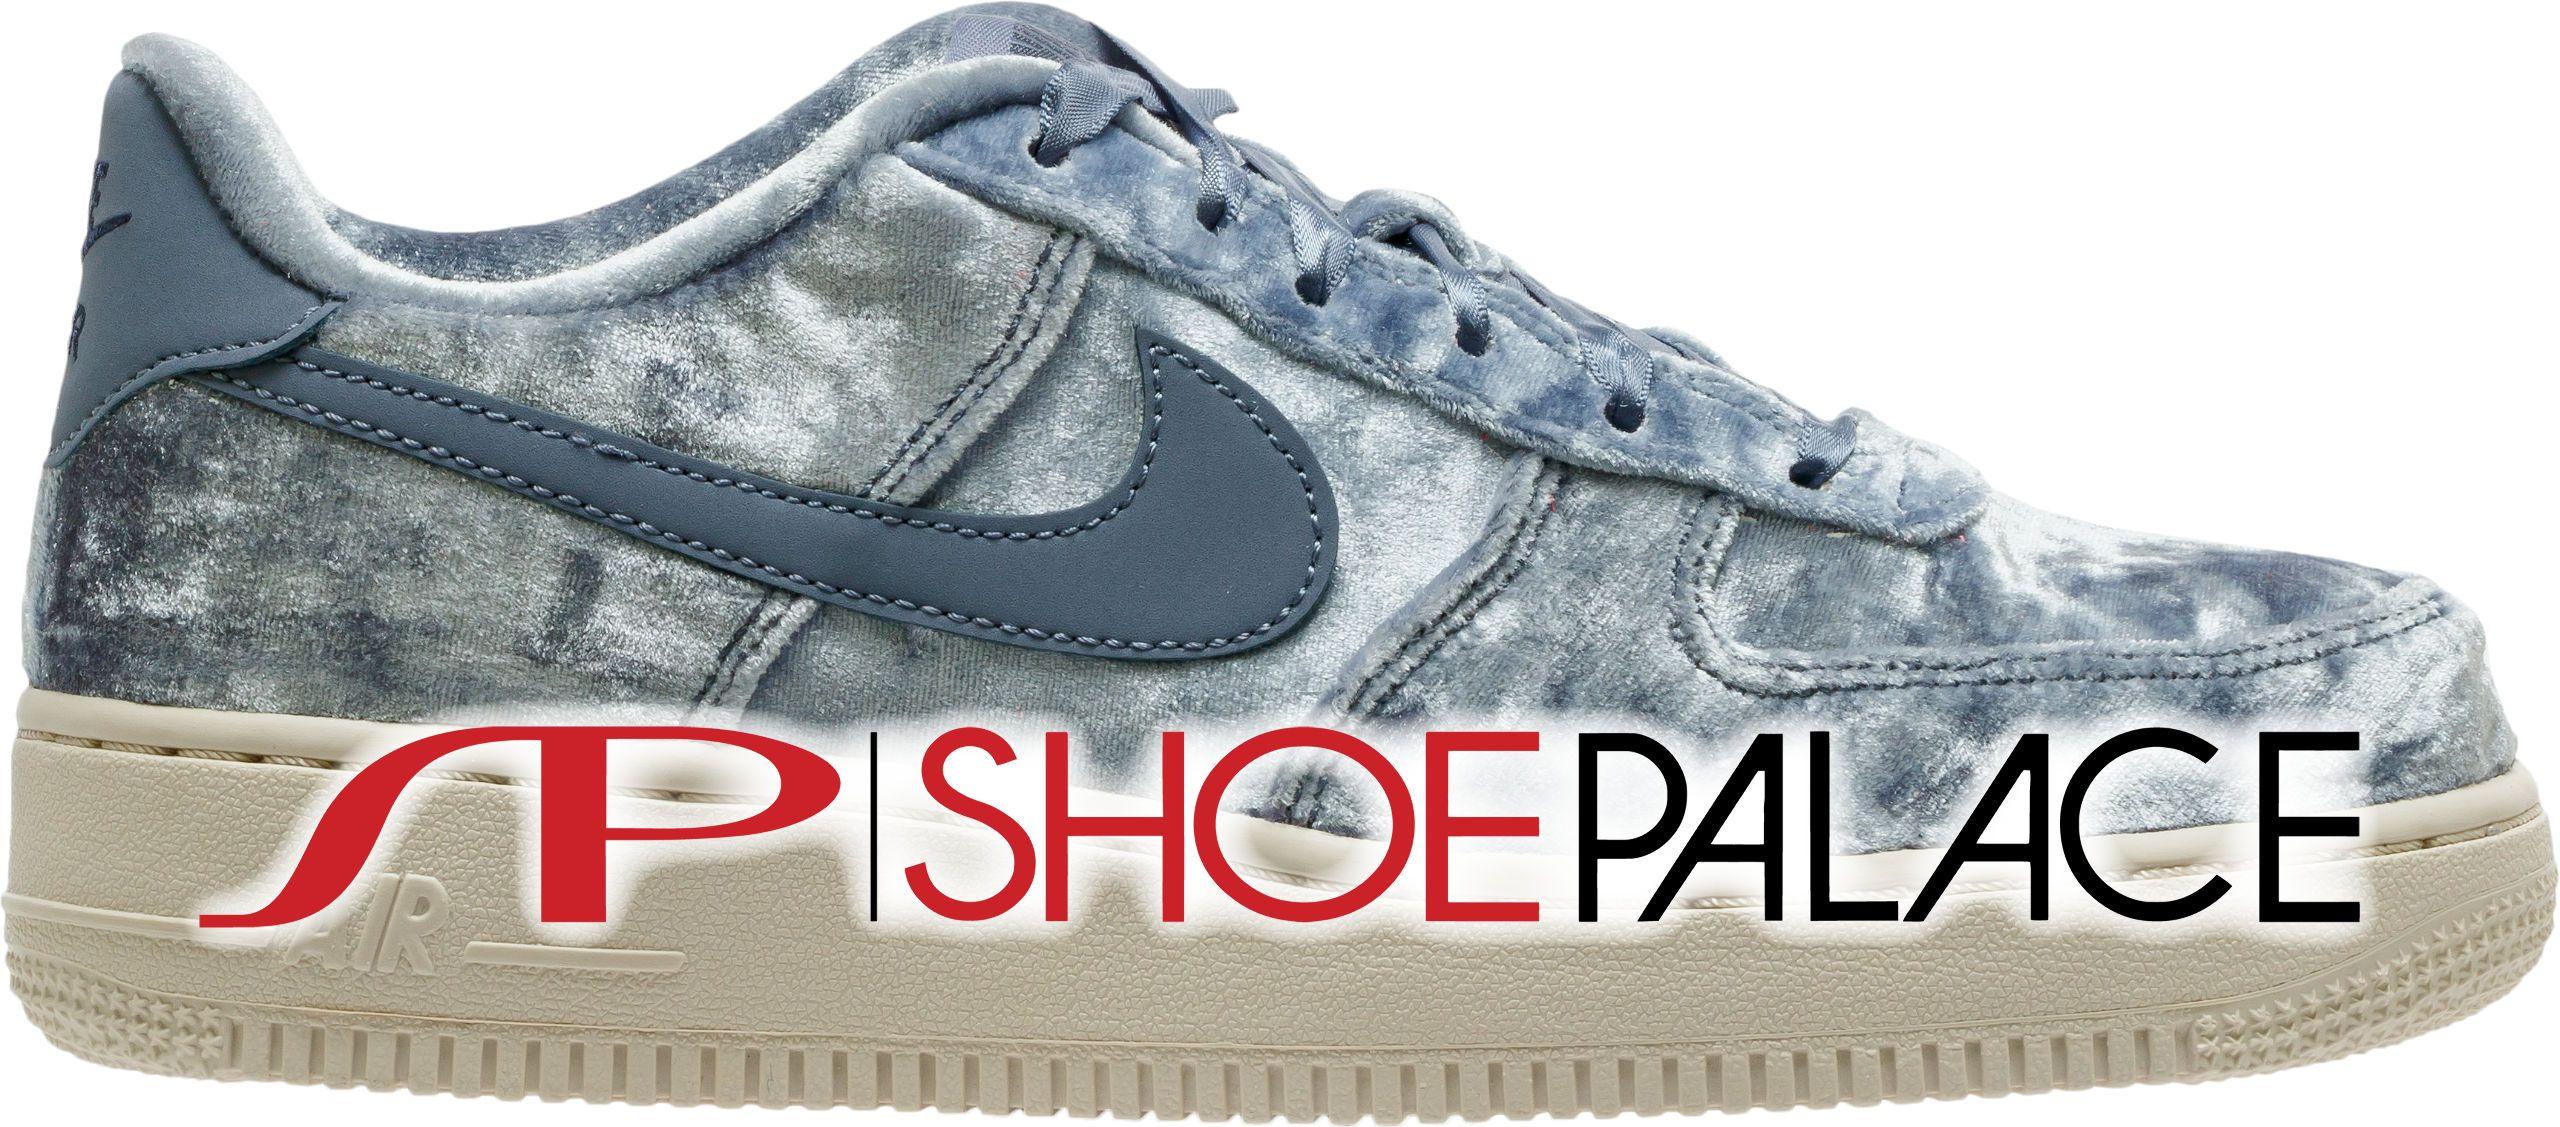 White and Blue Shoe Brand Logo - Nike 849345 401 Air Force 1 LV8 Grade School Lifestyle Shoe Blue